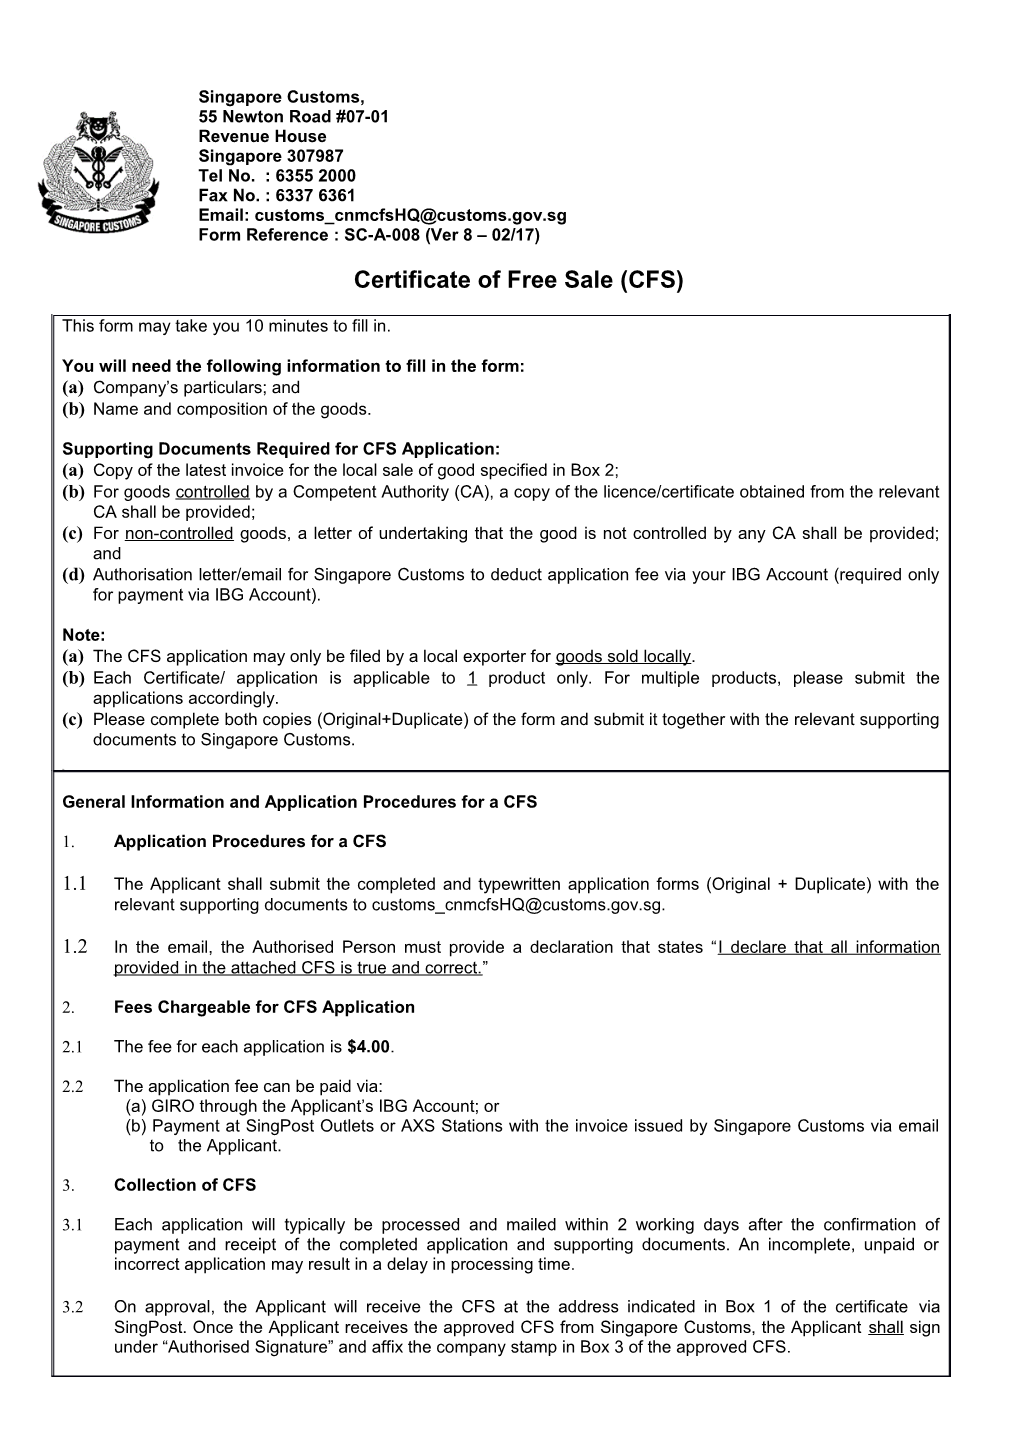 Certificate of Free Sale (CFS)